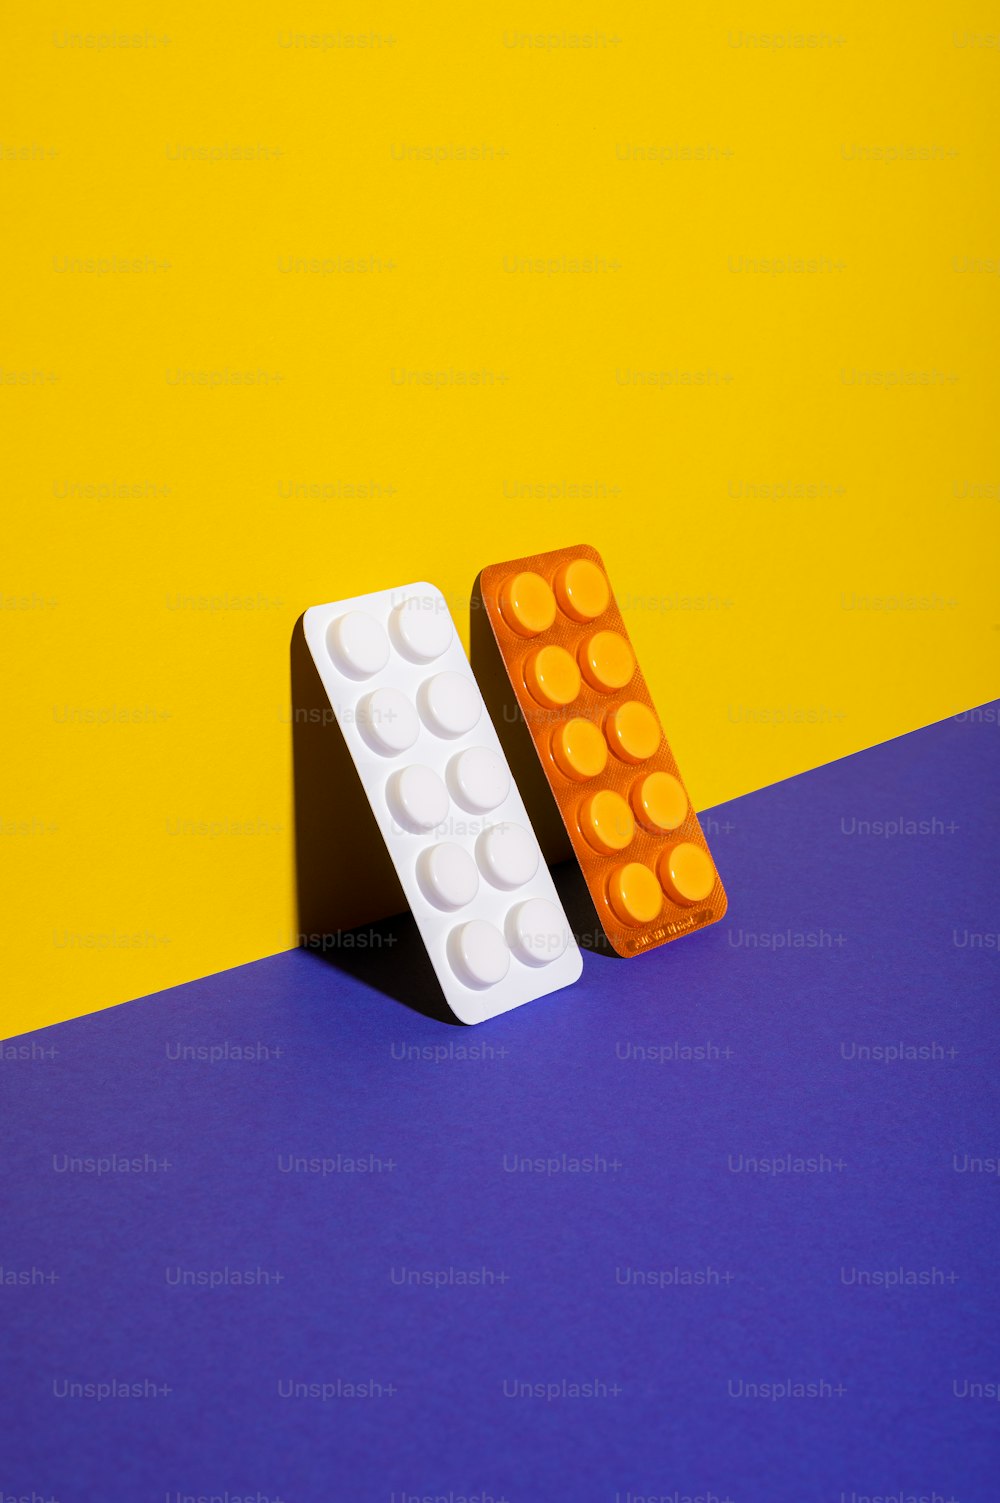 Un paio di mattoncini Lego seduti sopra una superficie blu